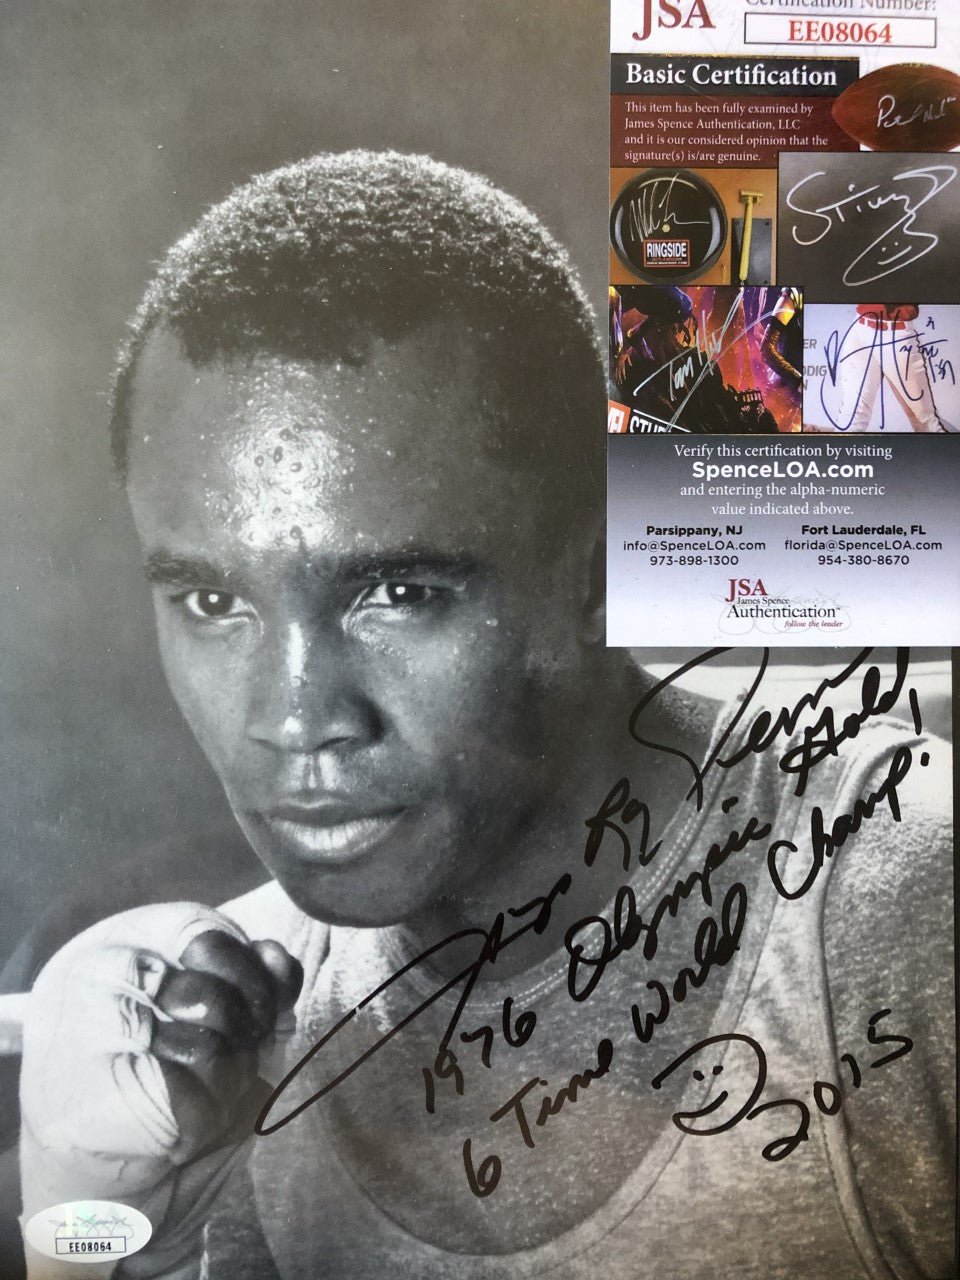 Sugar Ray Leonard Autographed 8x10 Boxing Photo Signed with Rare inscription JSA Cert